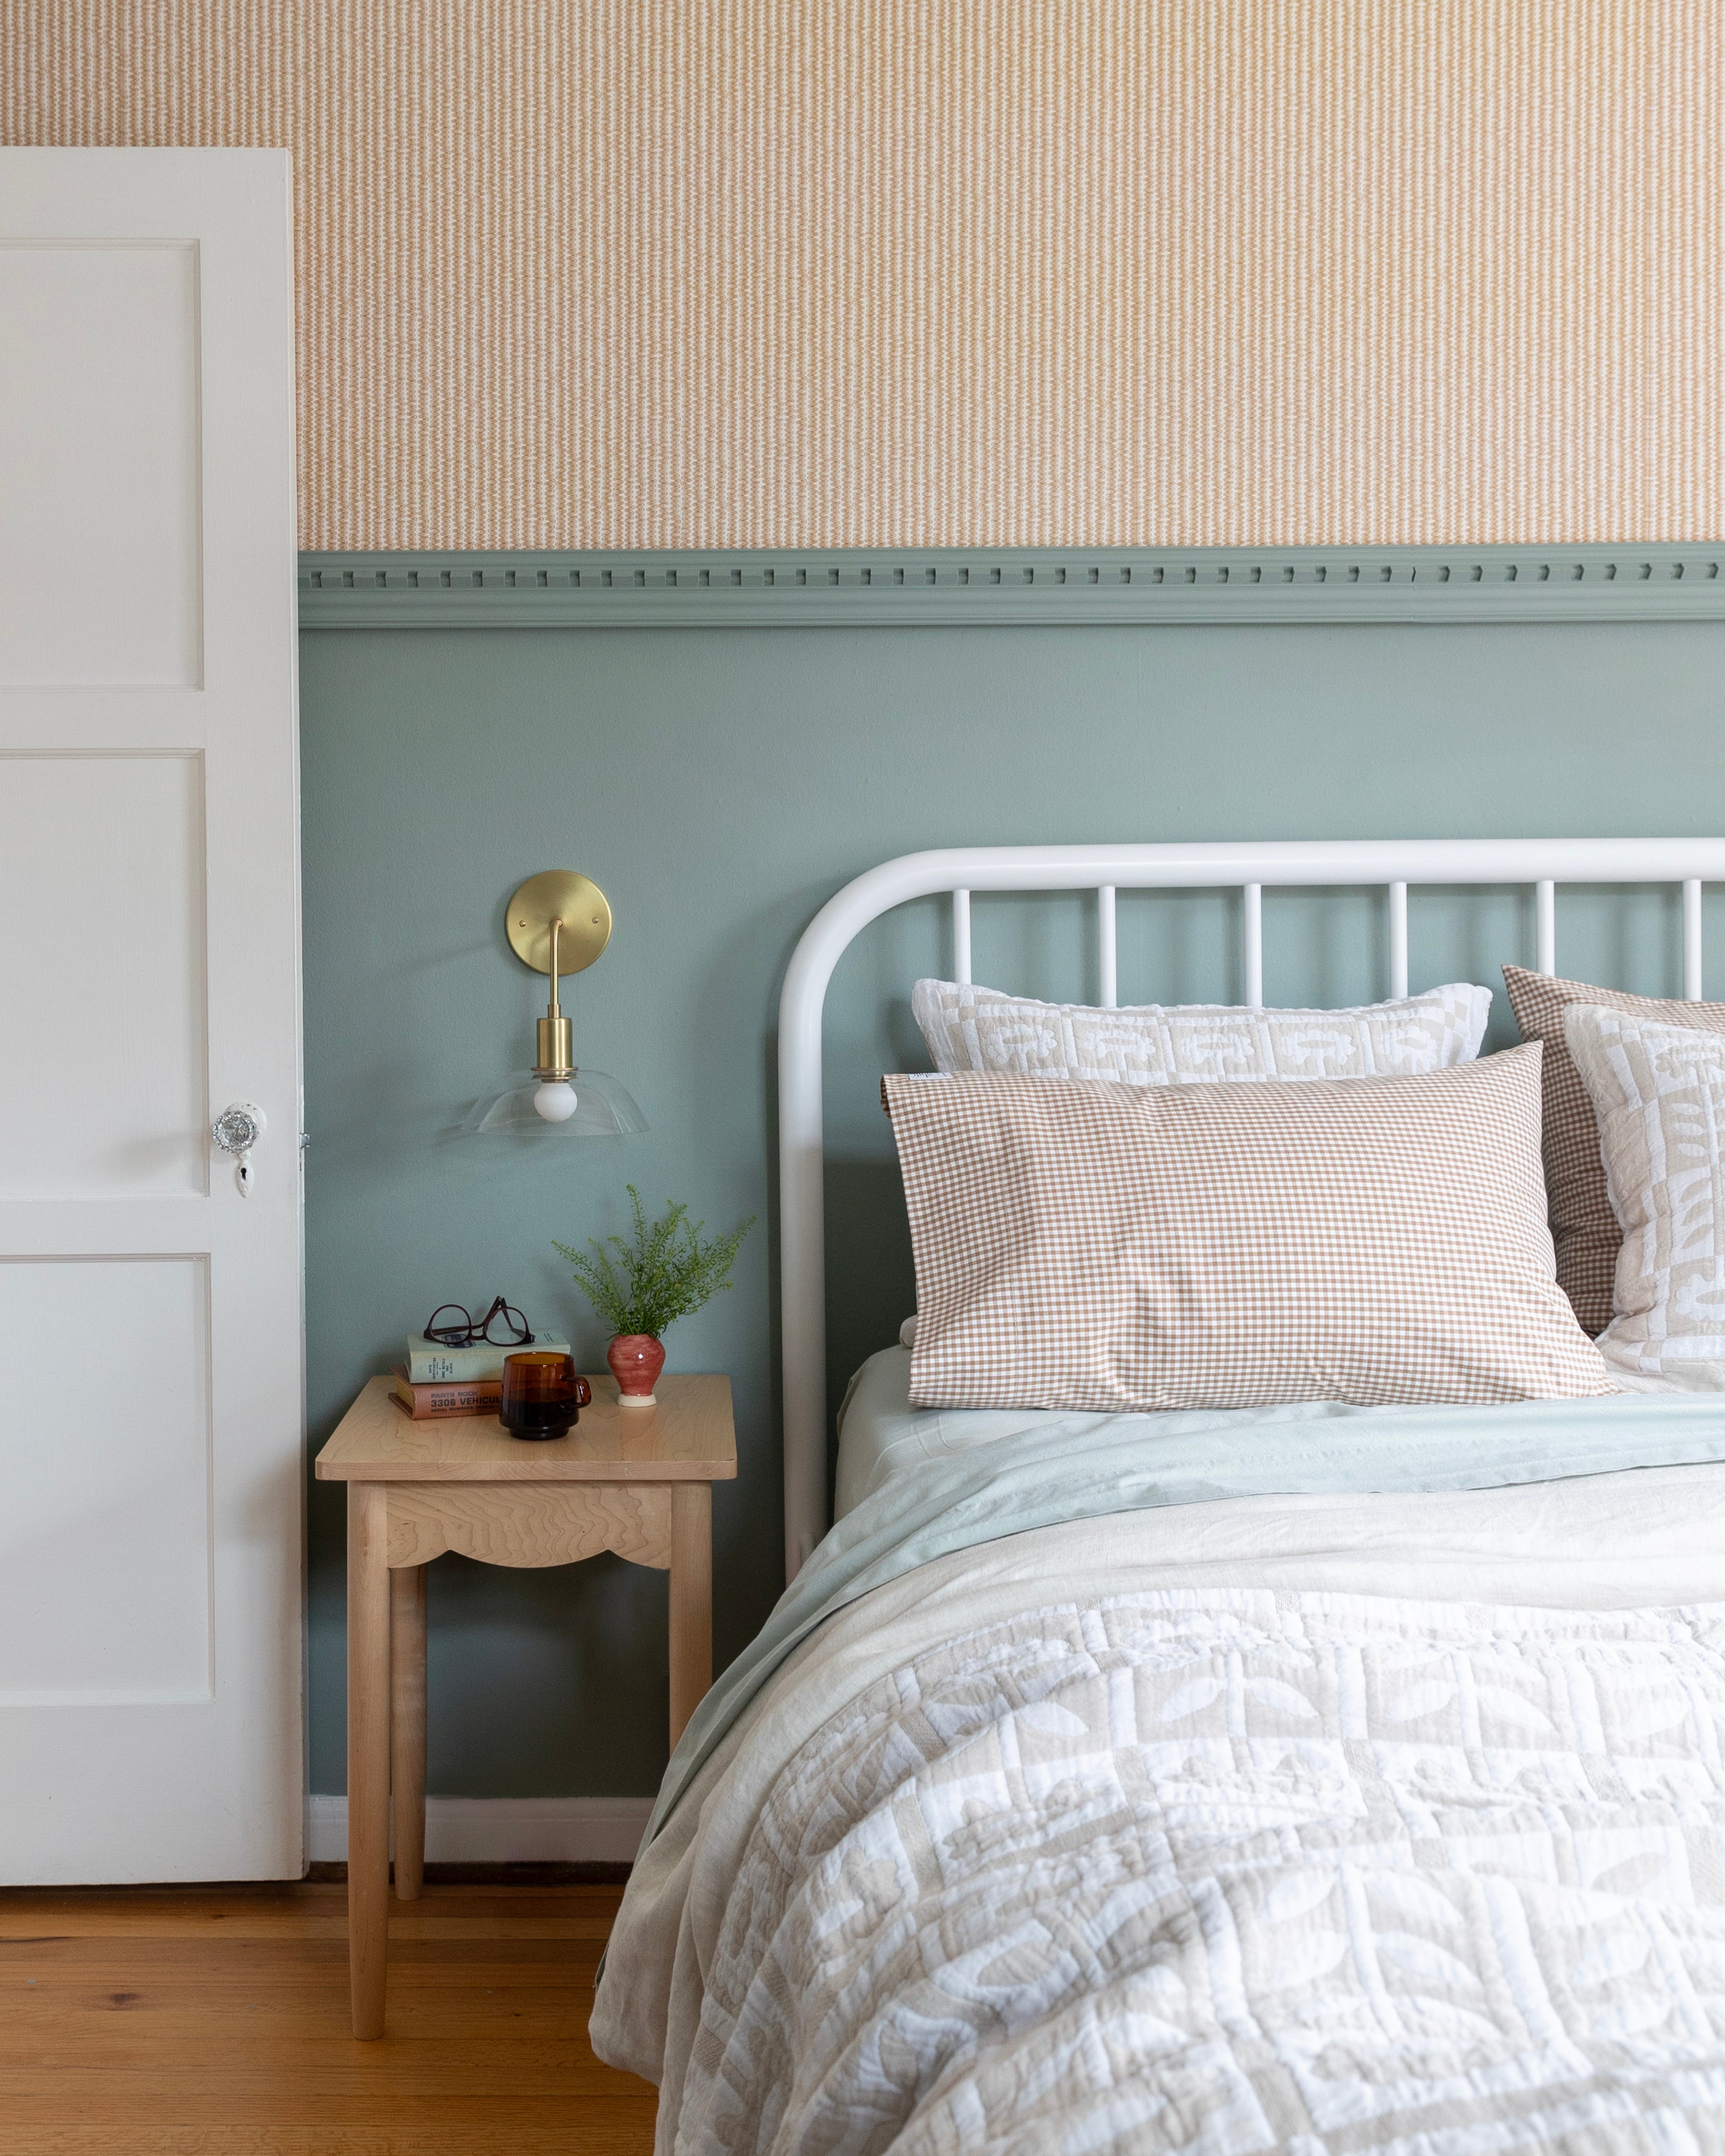 Cozy bed in blue bedroom with wallpaper.